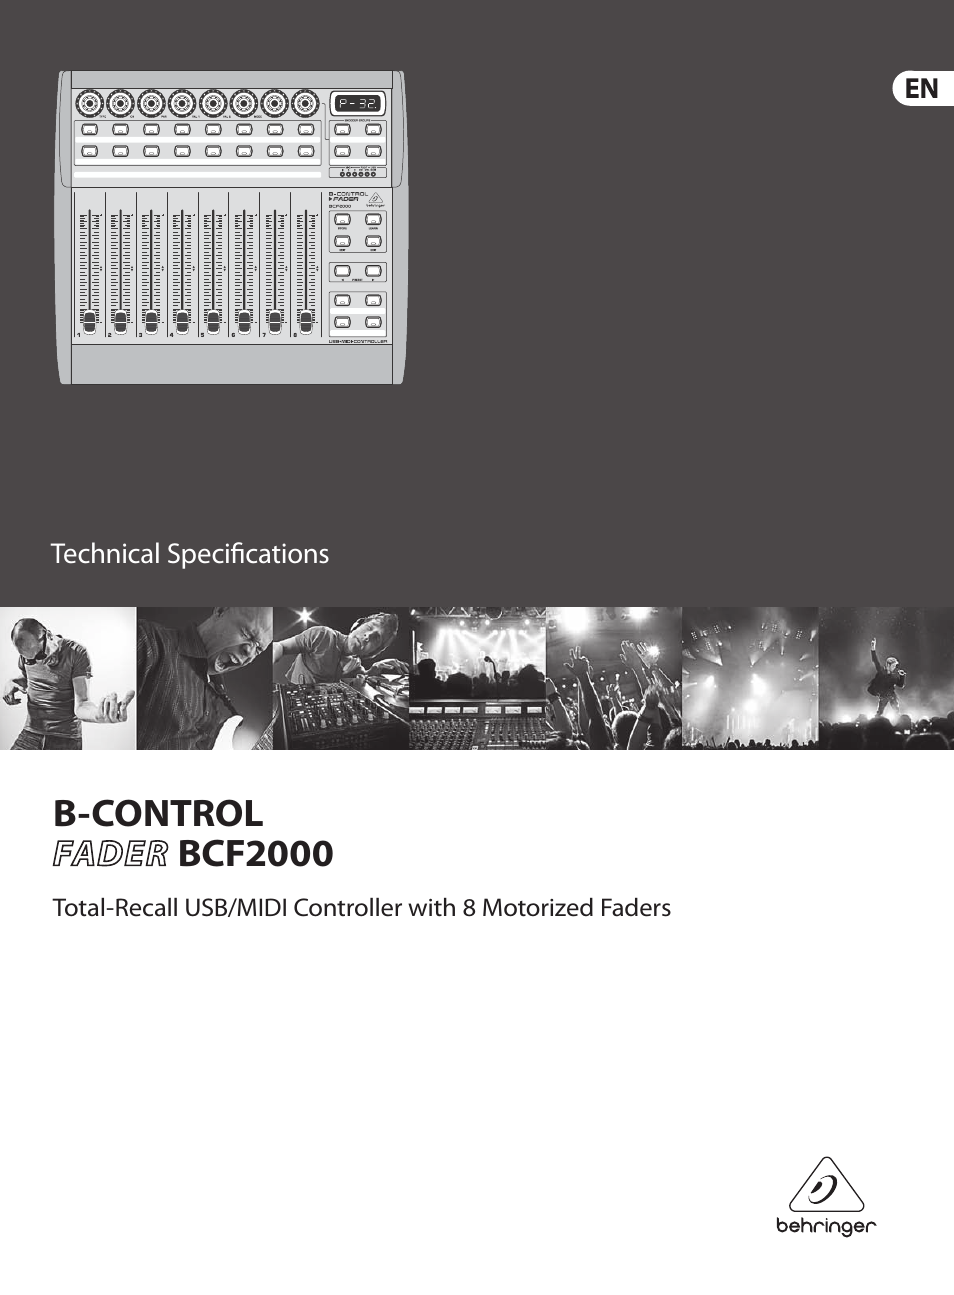 B-Control Fader BCF2000